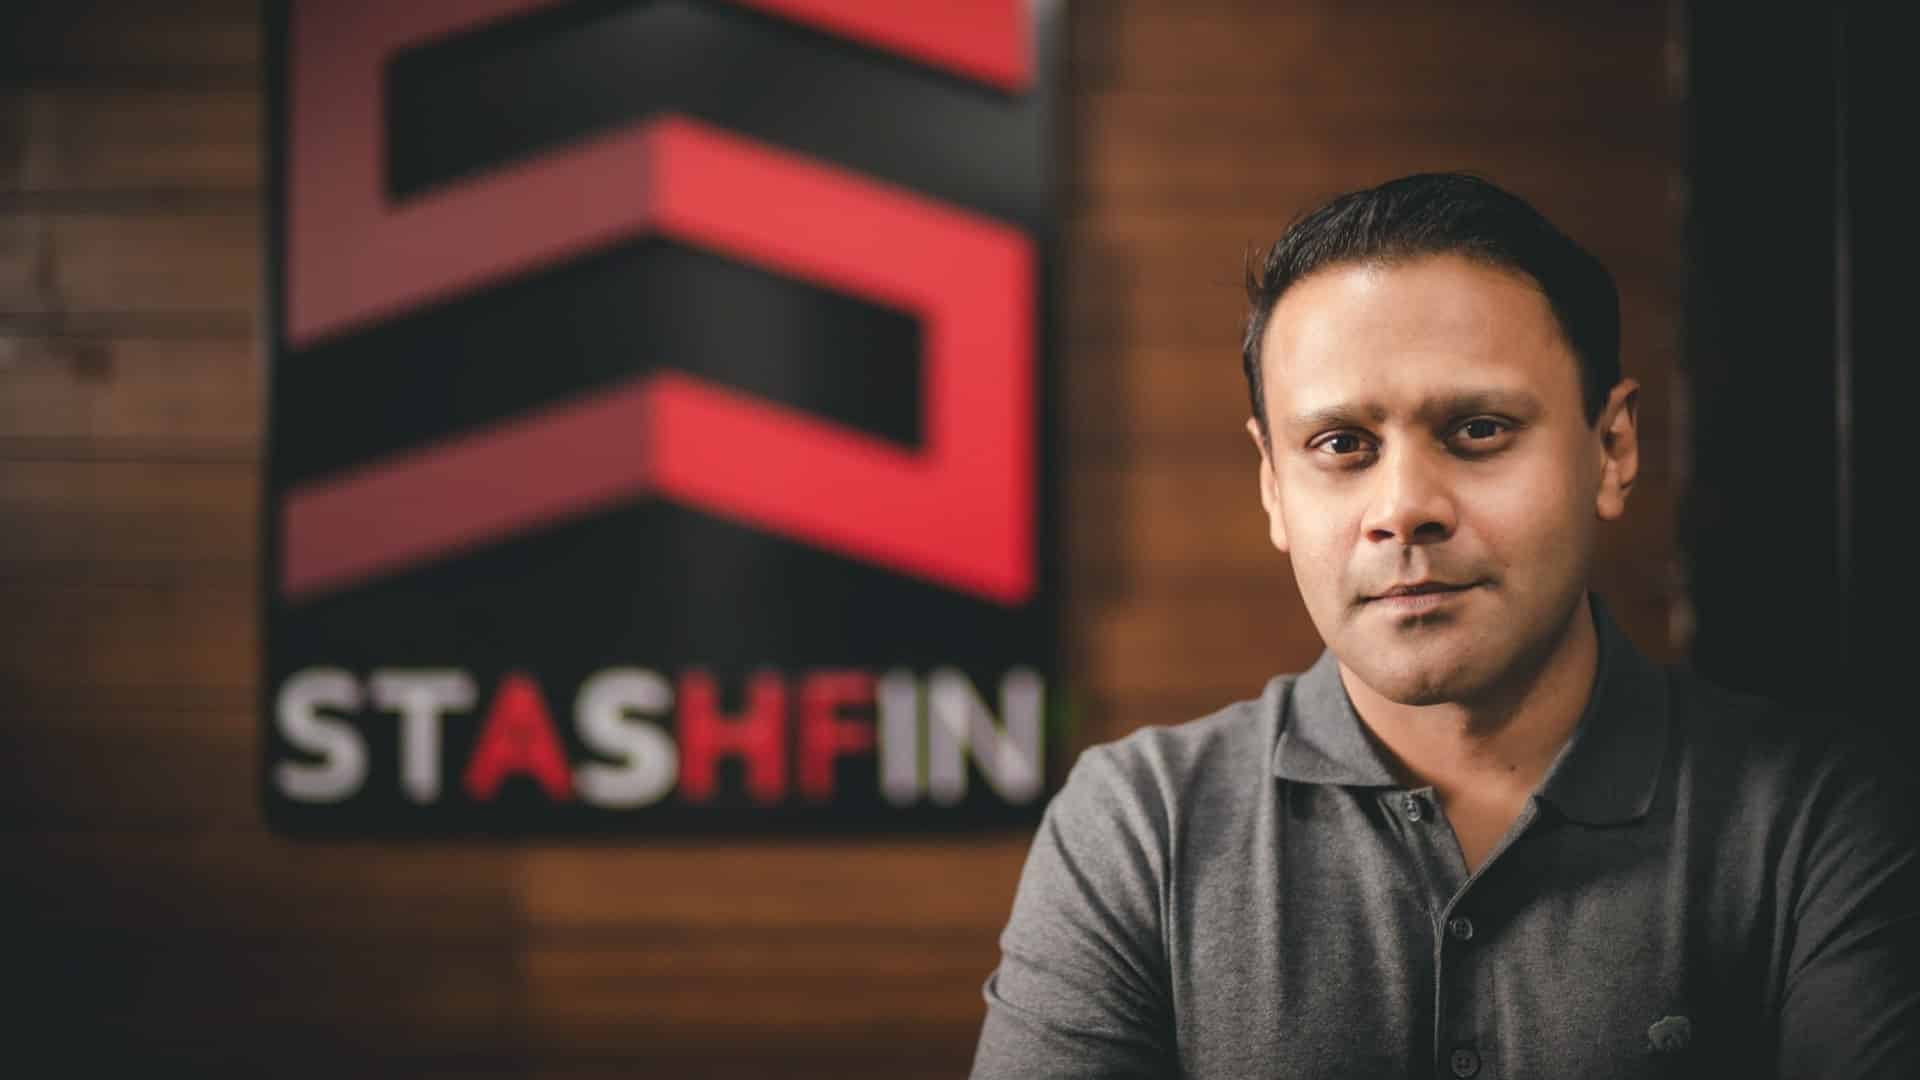 Neobanking platform Stashfin raises over Rs 2,100 crore from multiple investors